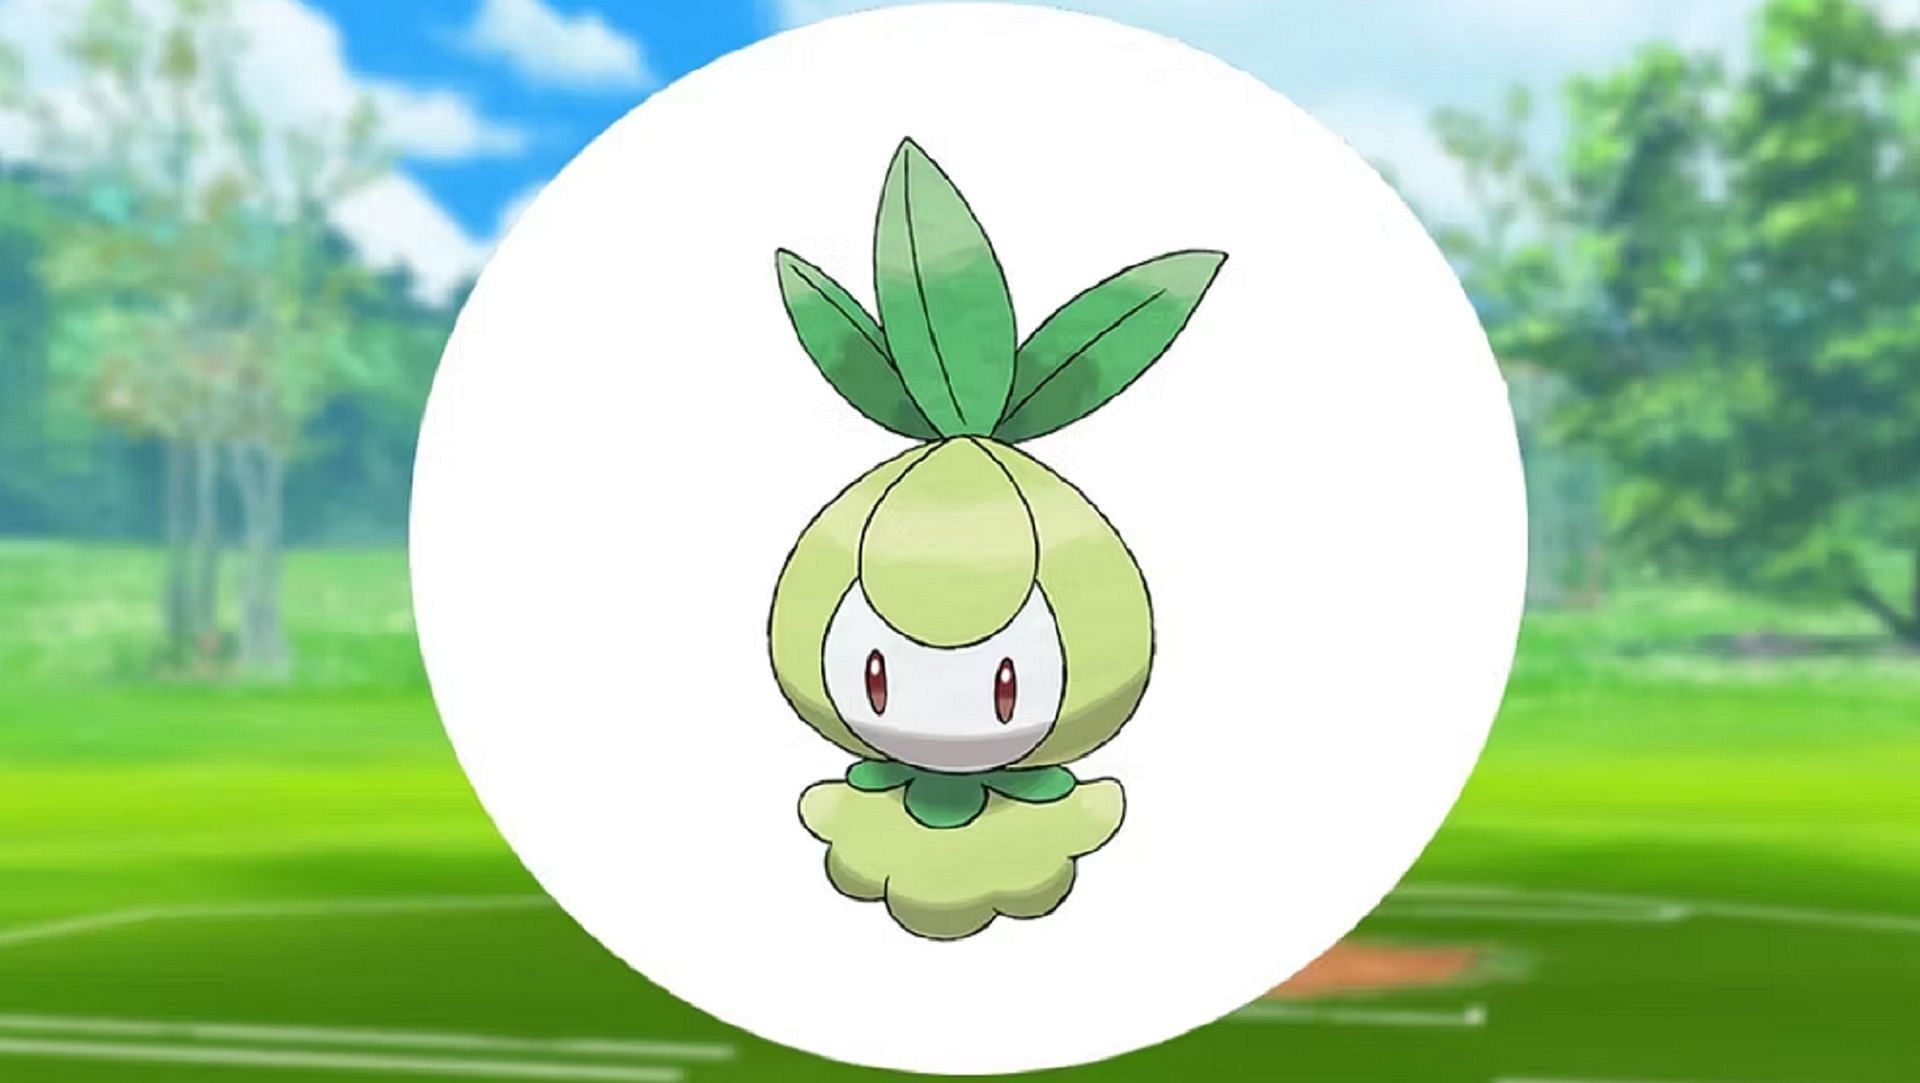 Petilil is a Grass-type Pokemon from Unova in Pokemon GO (Image via Niantic)